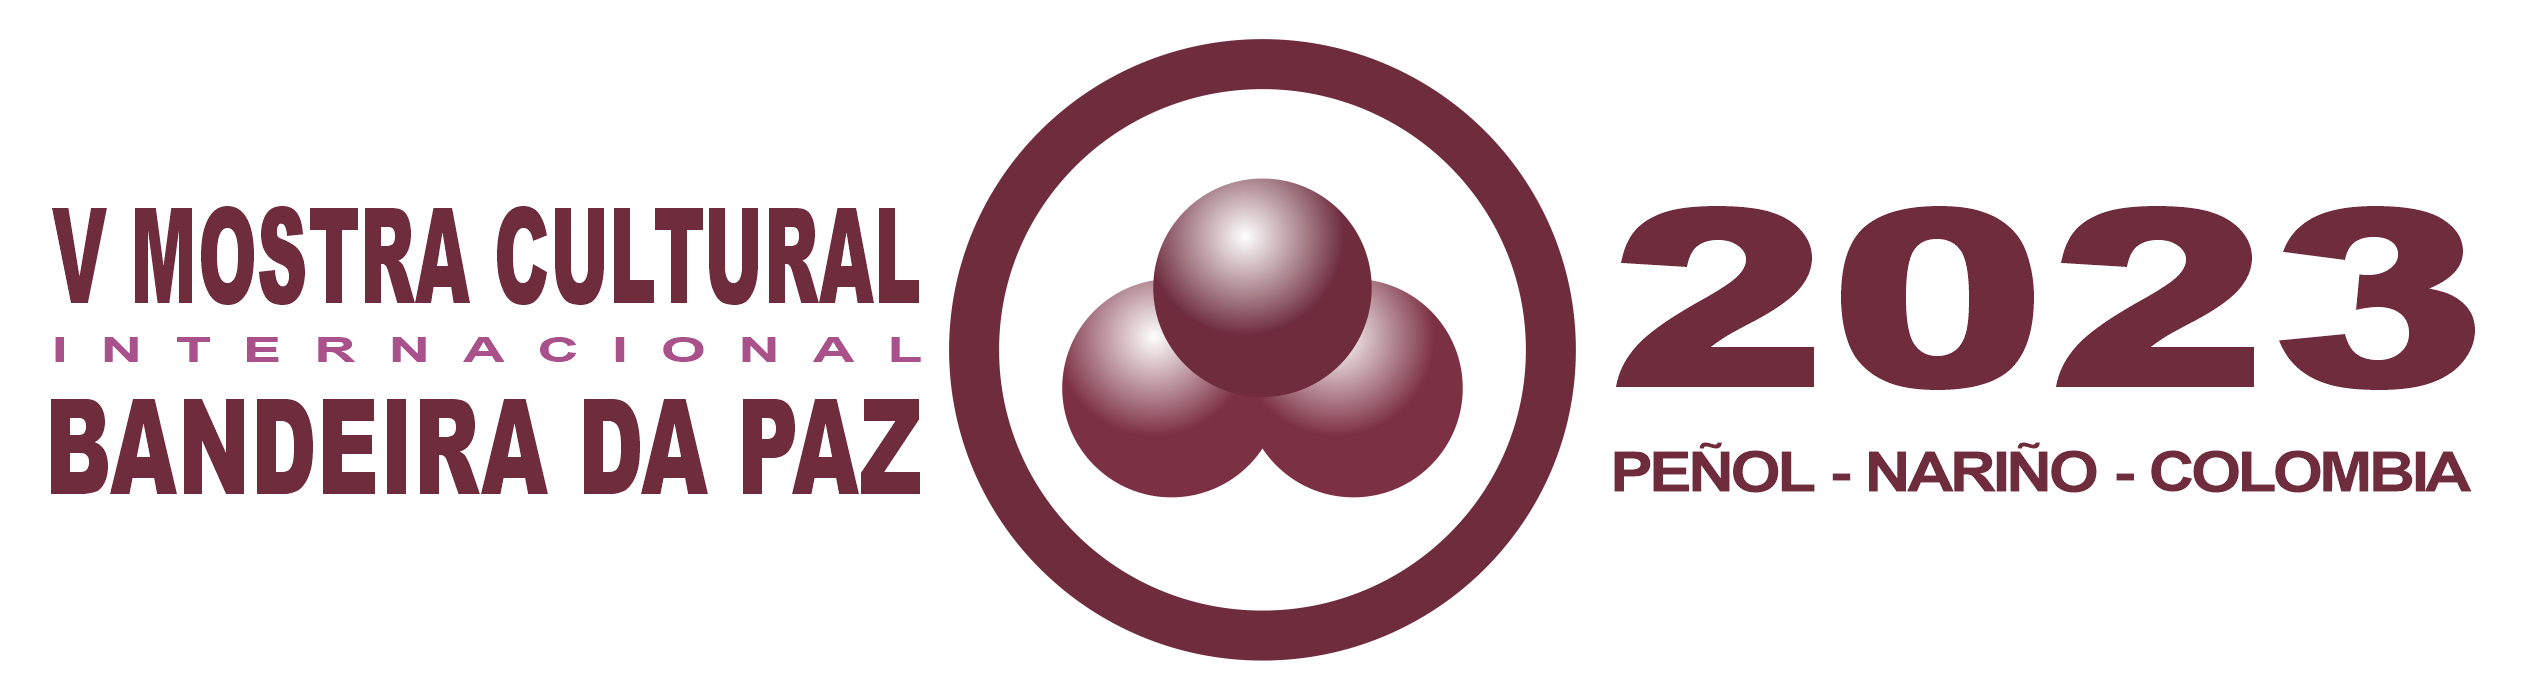 Logo V MOSTRA 2023 PENOL NARINO COLOMBIA